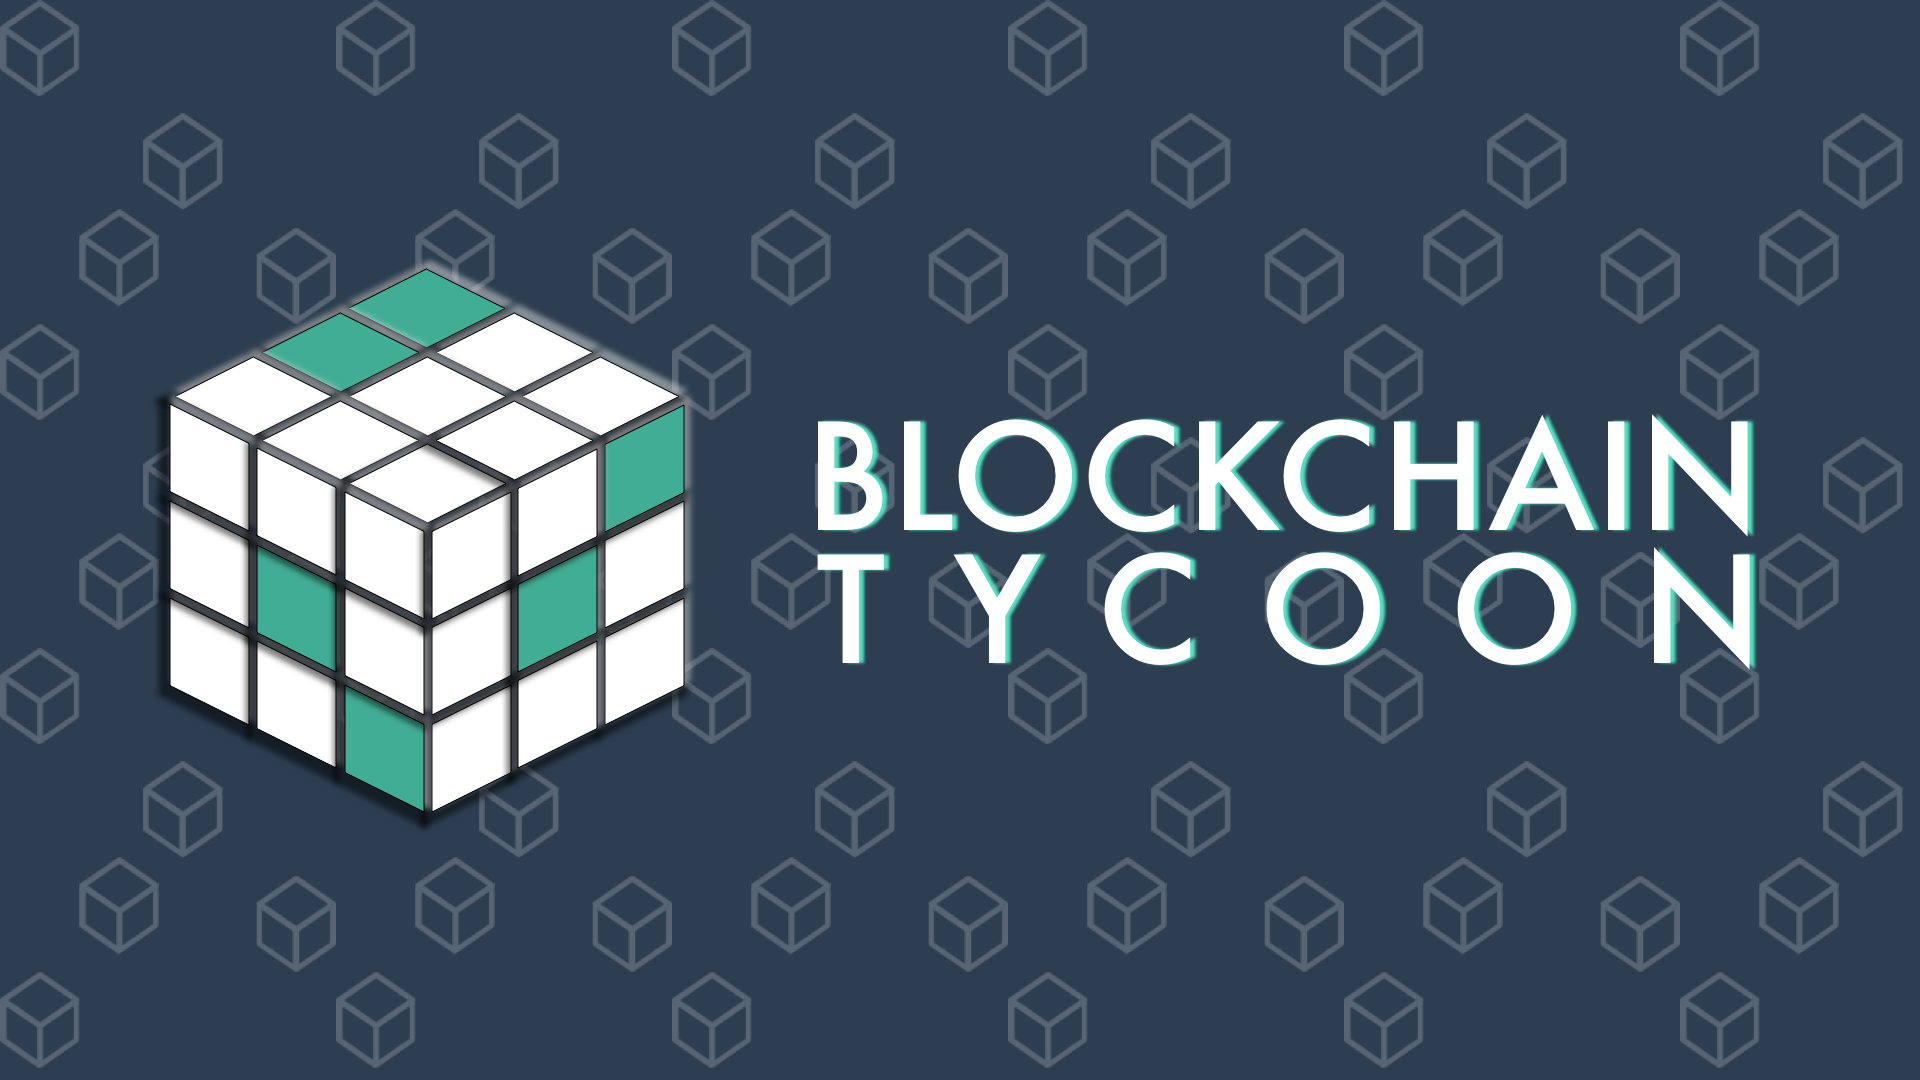 Симулятор криптовалюты Blockchain Tycoon Early Access запускается 9 августа